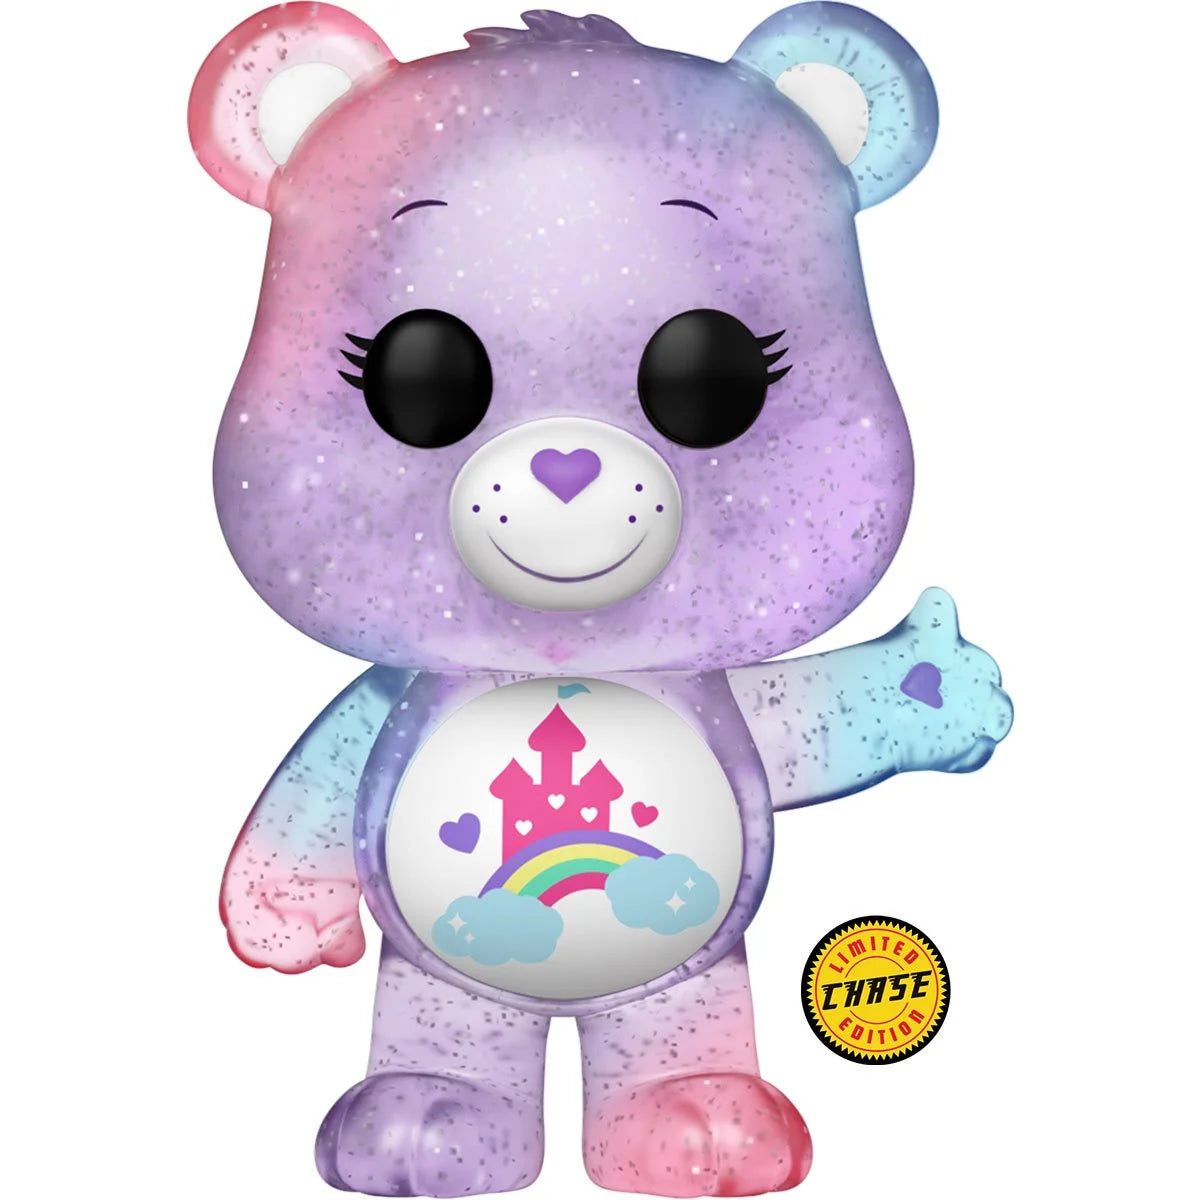 Funko Pop! Care Bears 40th Anniversary: Care-a-Lot Bear